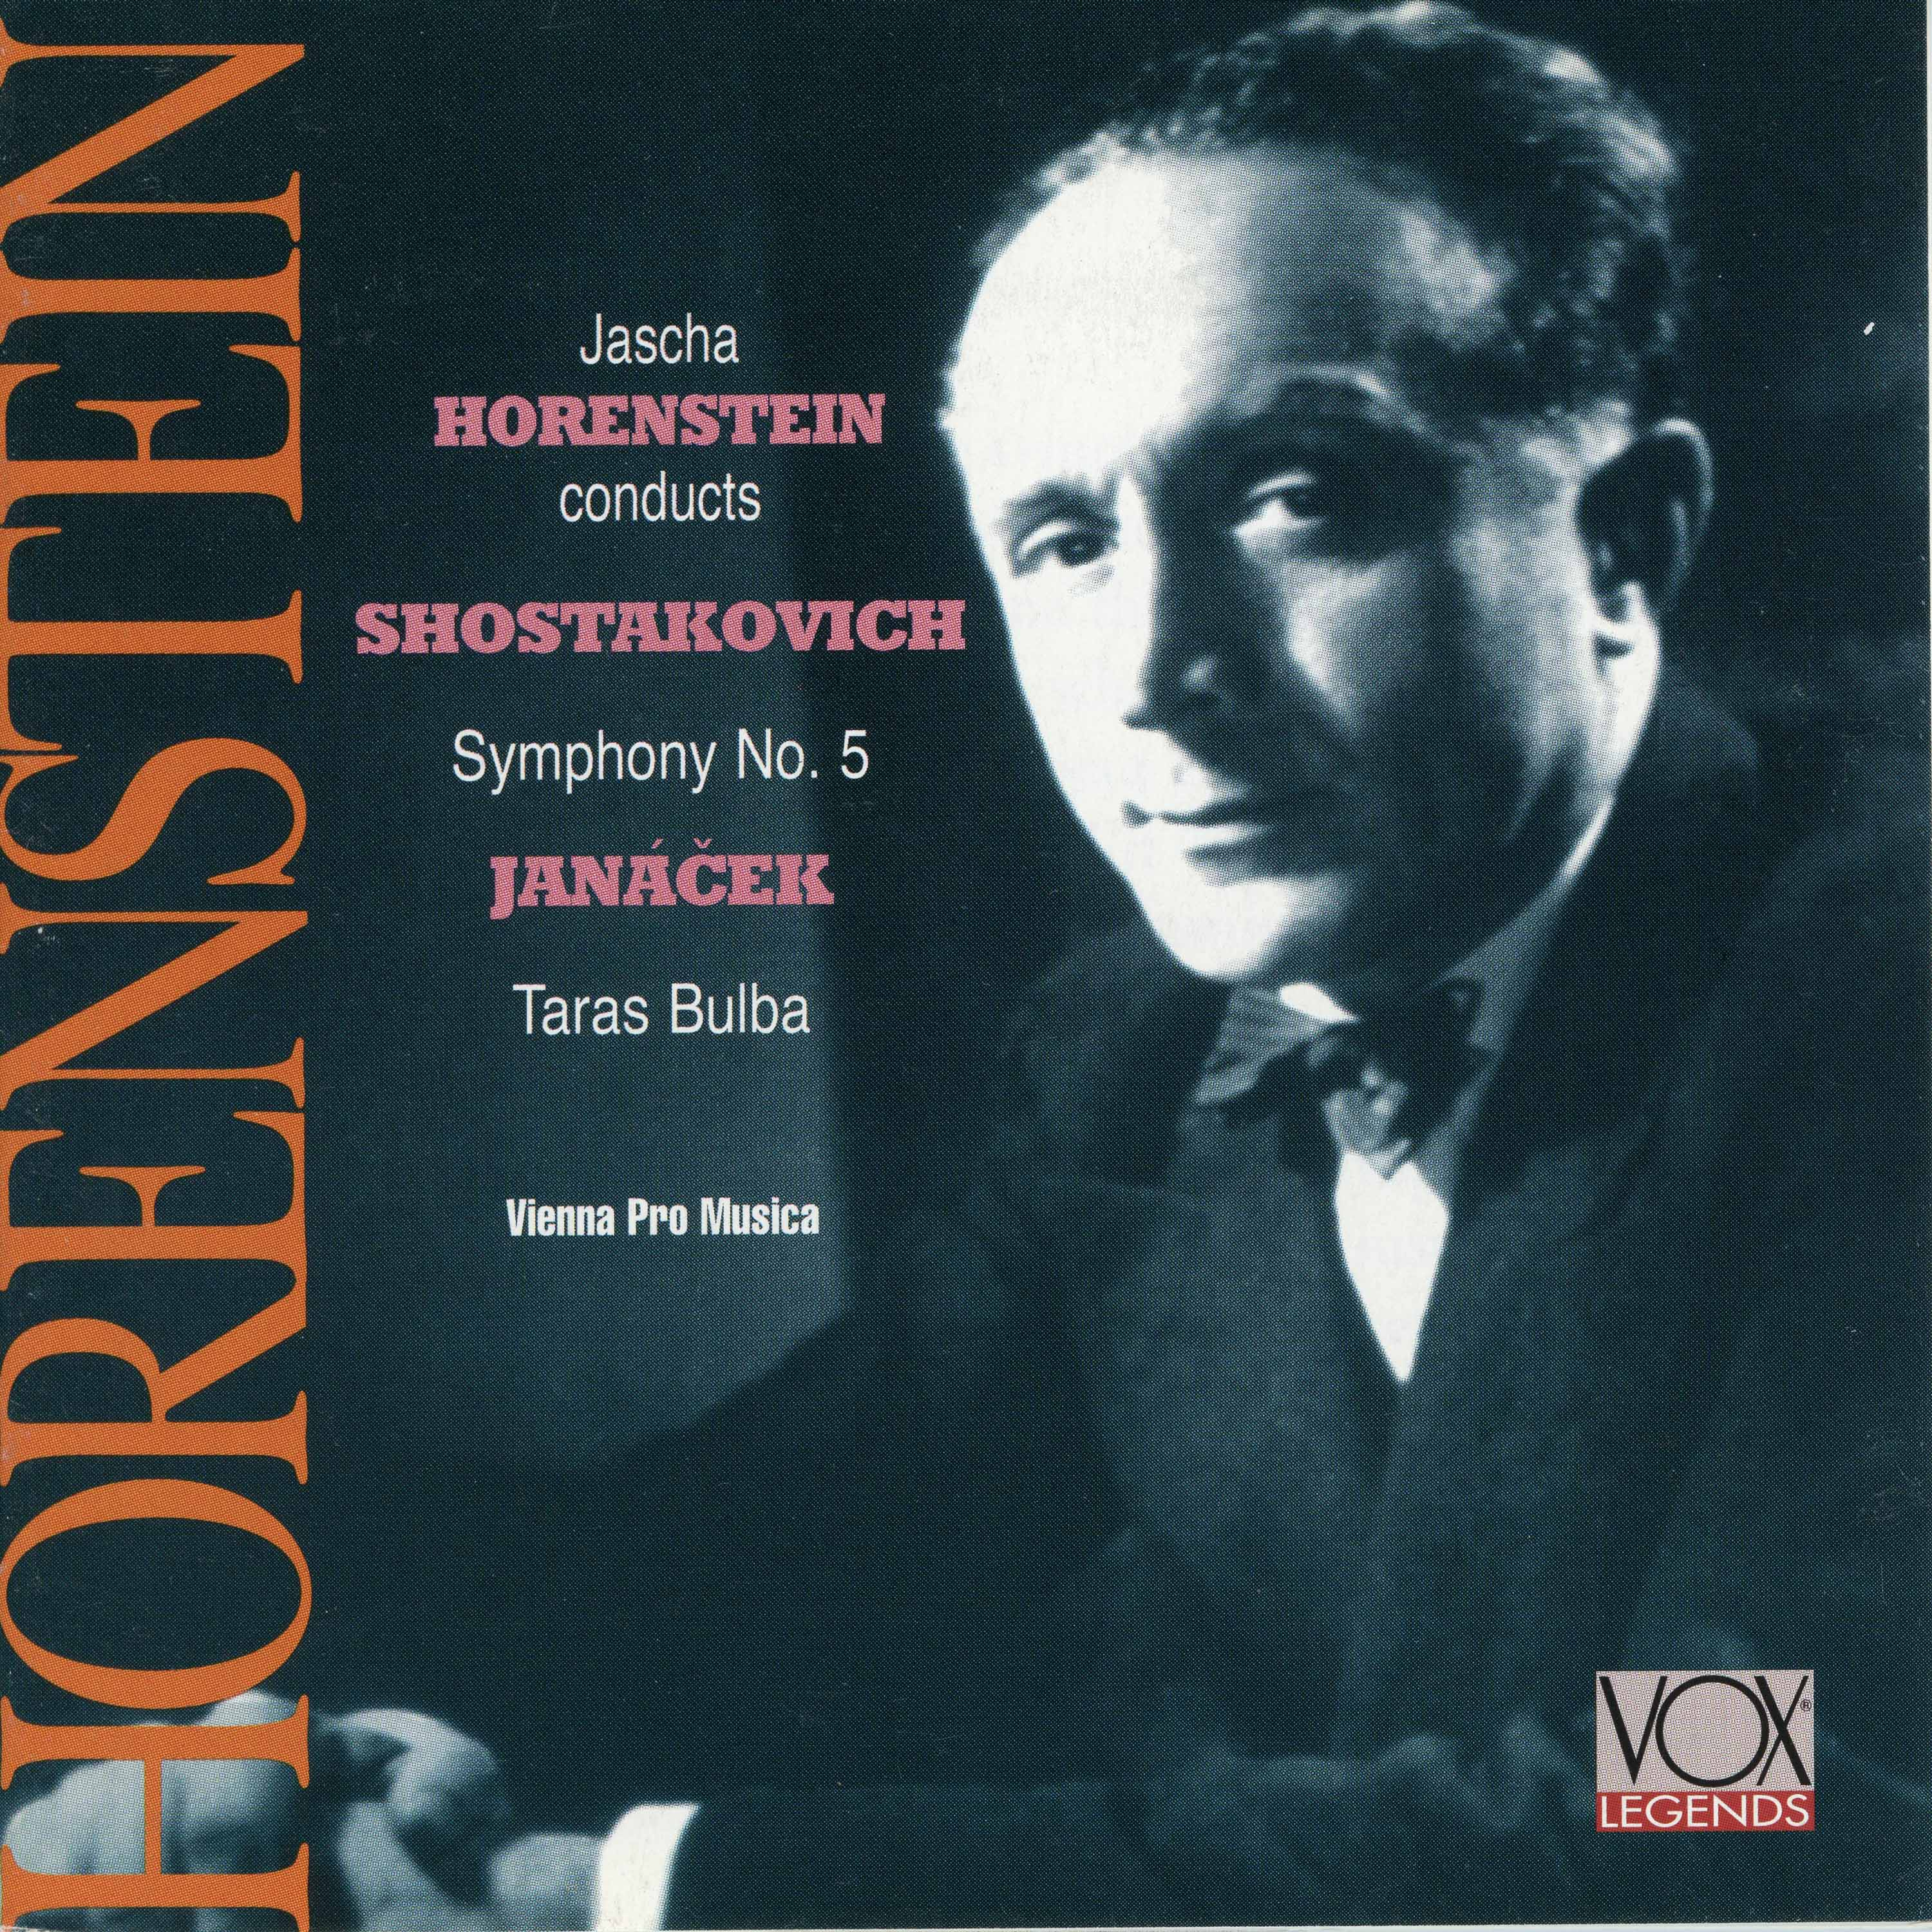 Shostakovich: Symphony No. 5  Jana cek: Taras Bulba